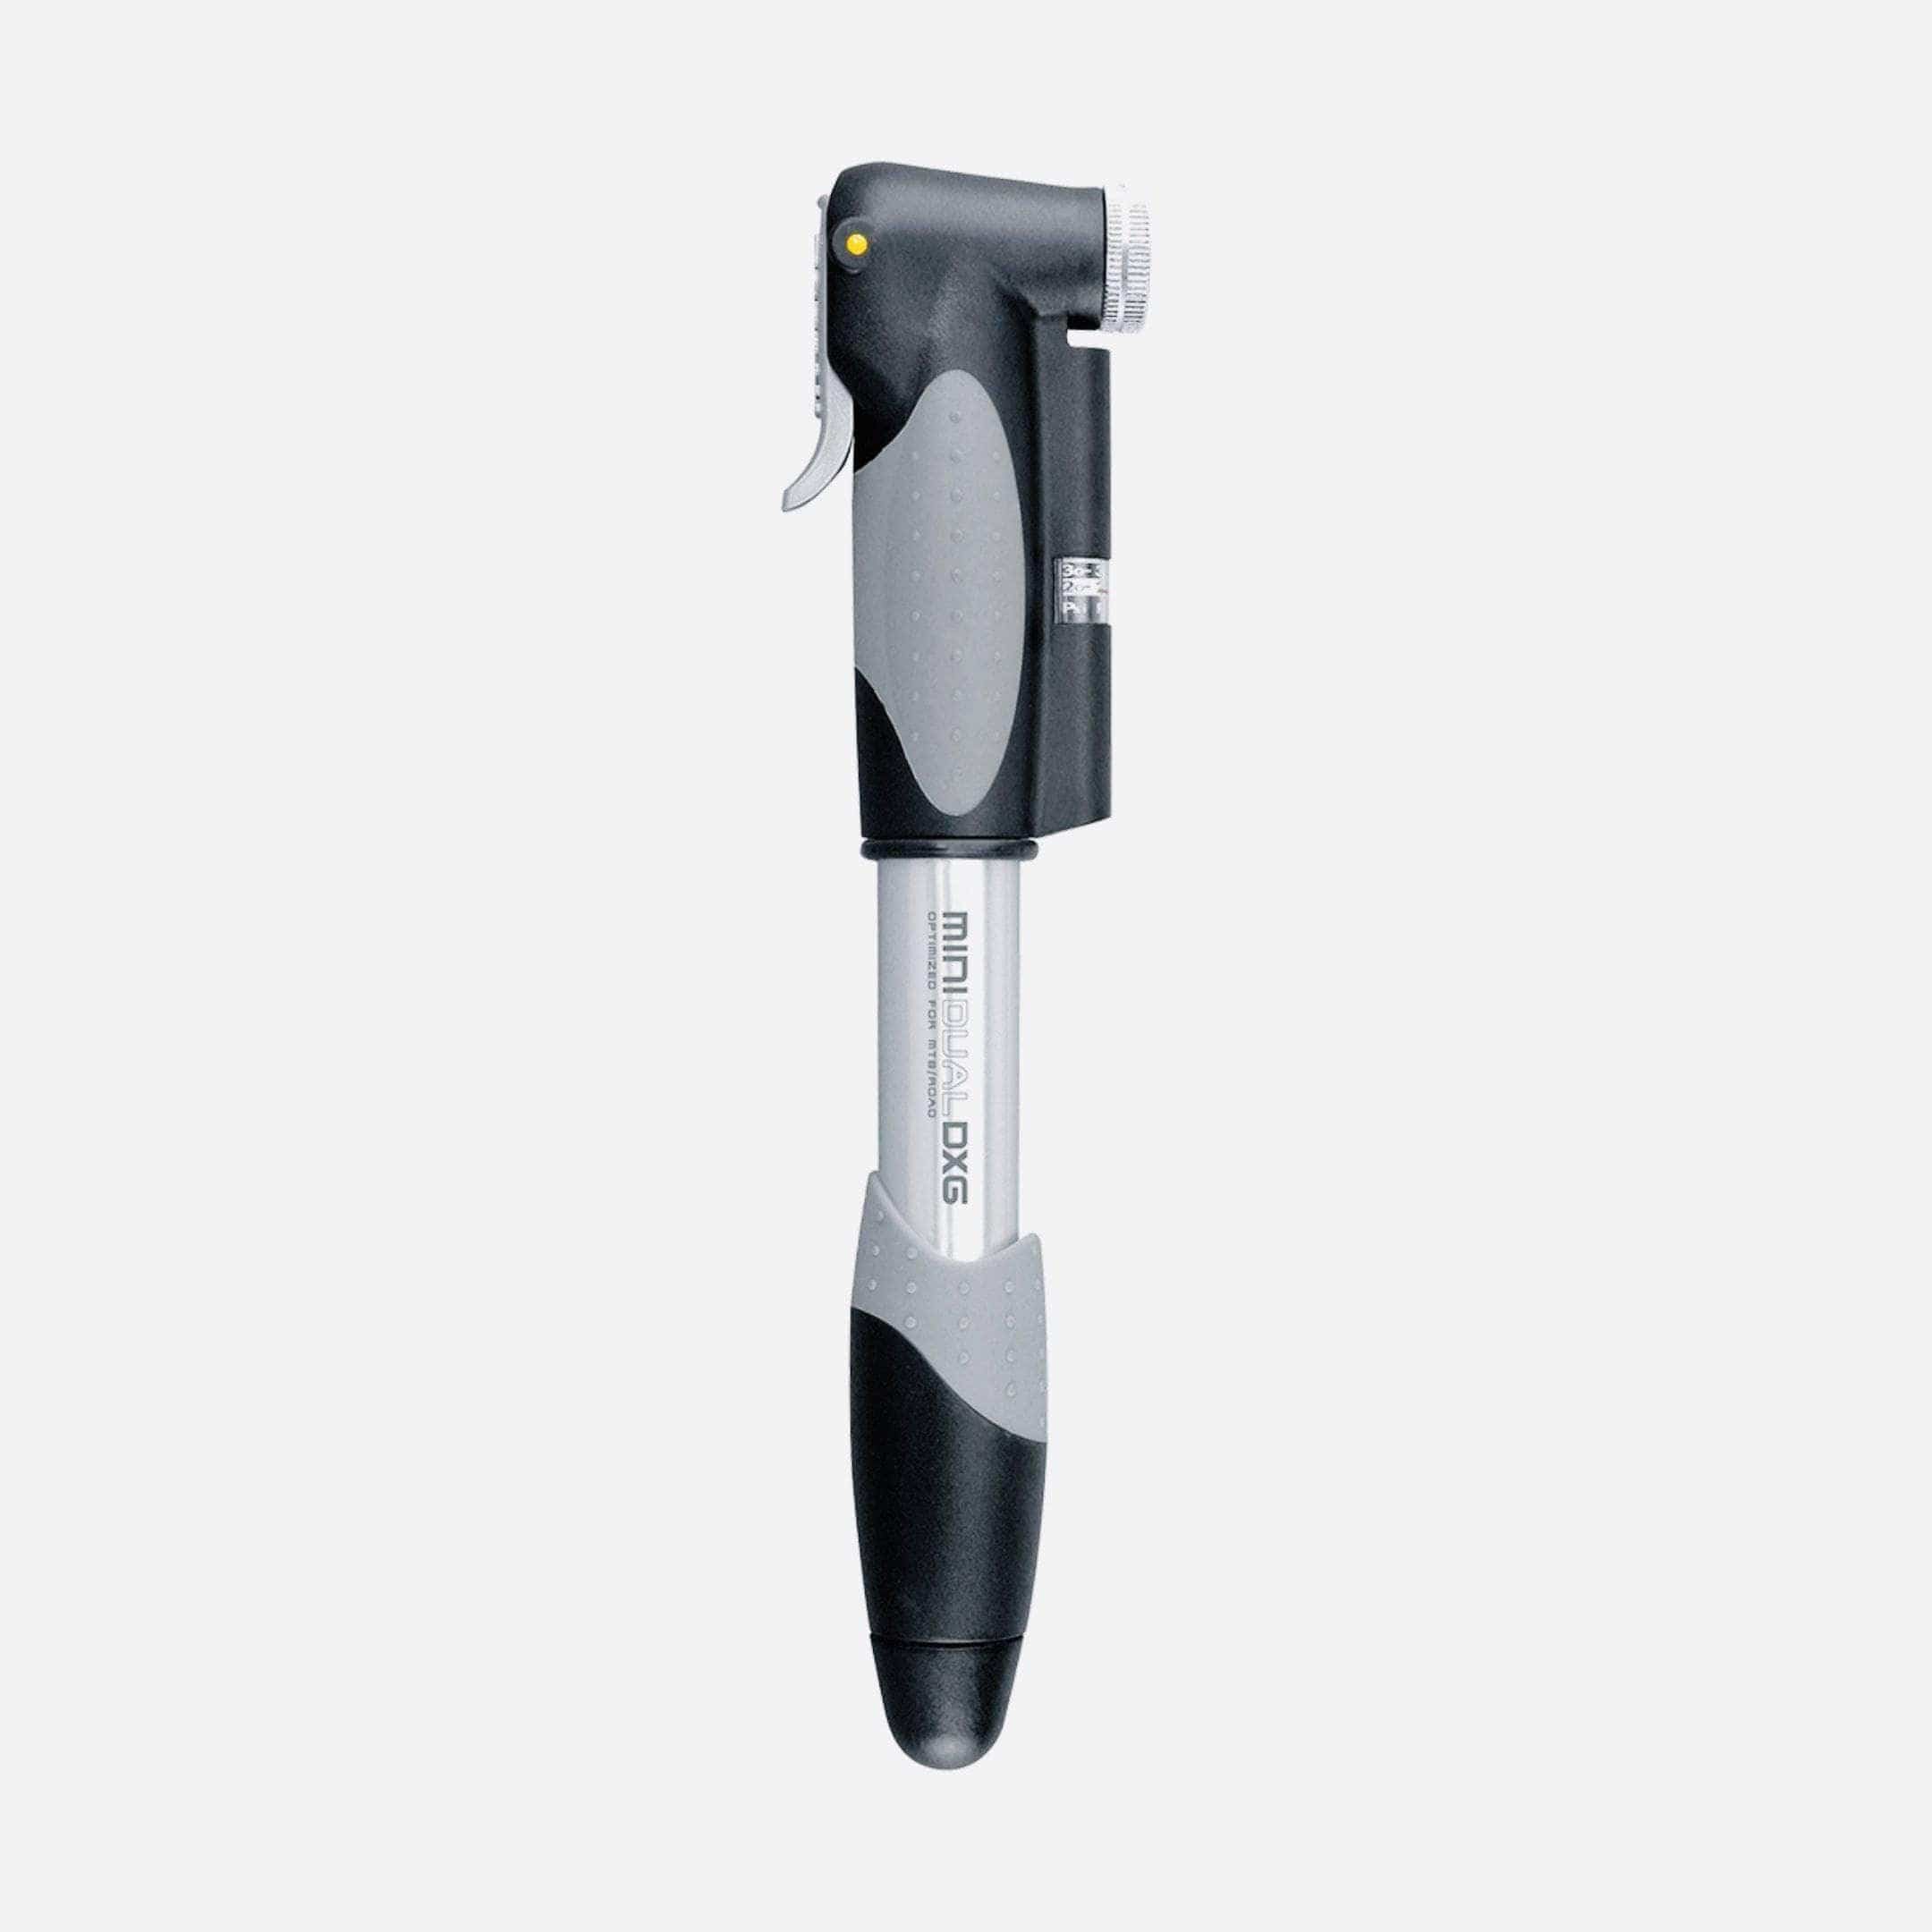 Topeak Mini Master Blaster DXG Frame Pump with Gauge Accessories - Hand Pumps